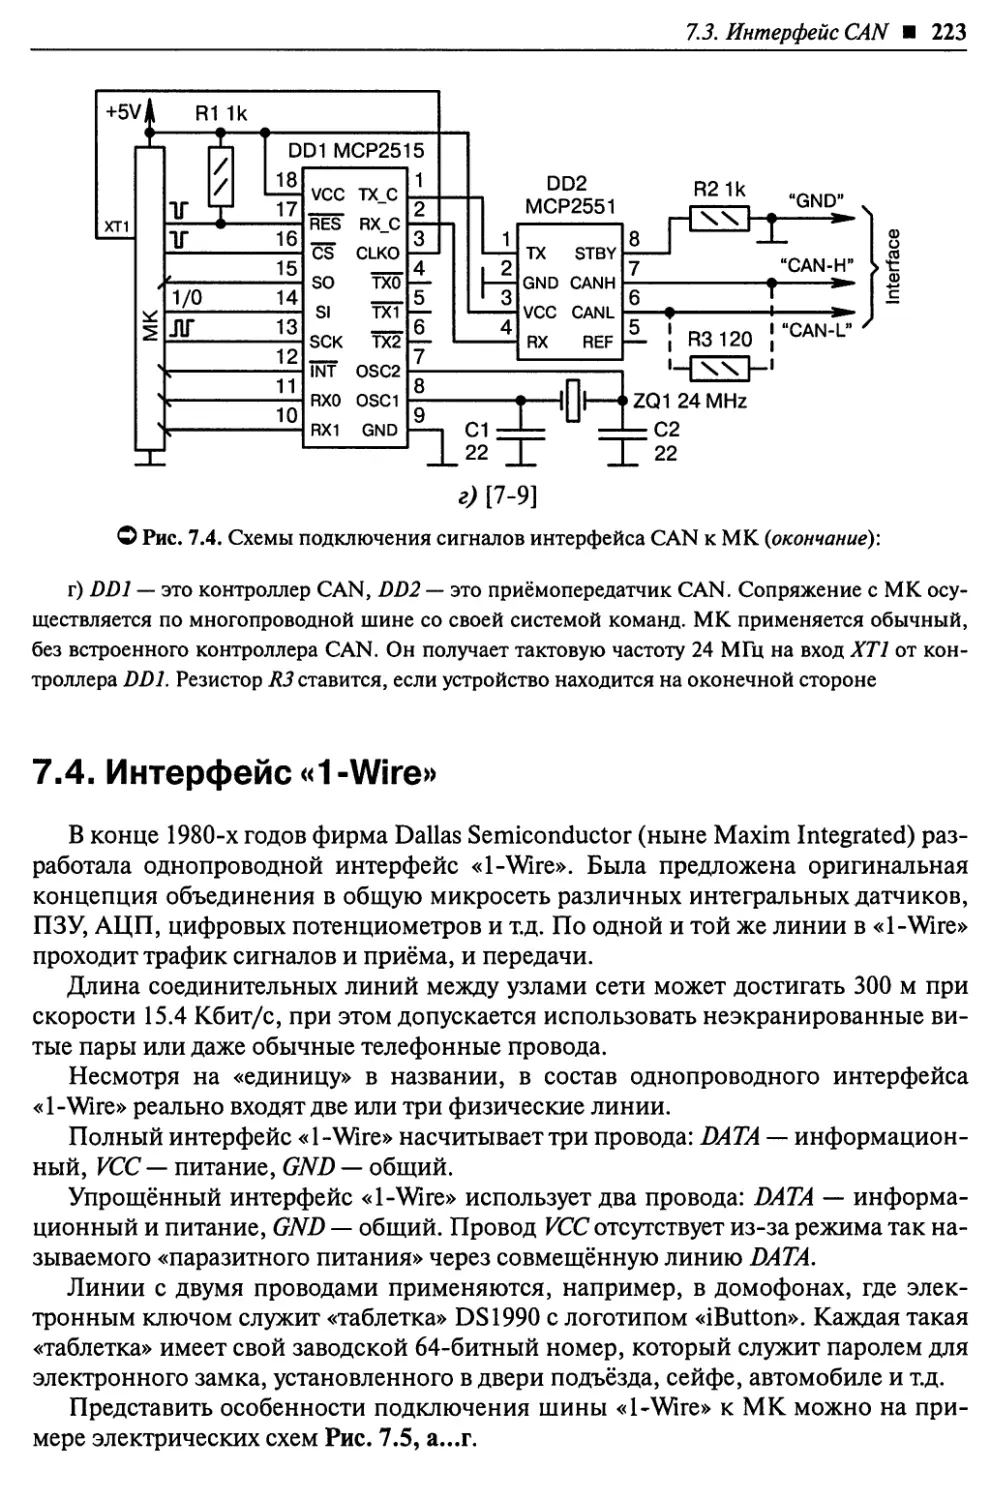 7.4. Интерфейс «1-Wire»